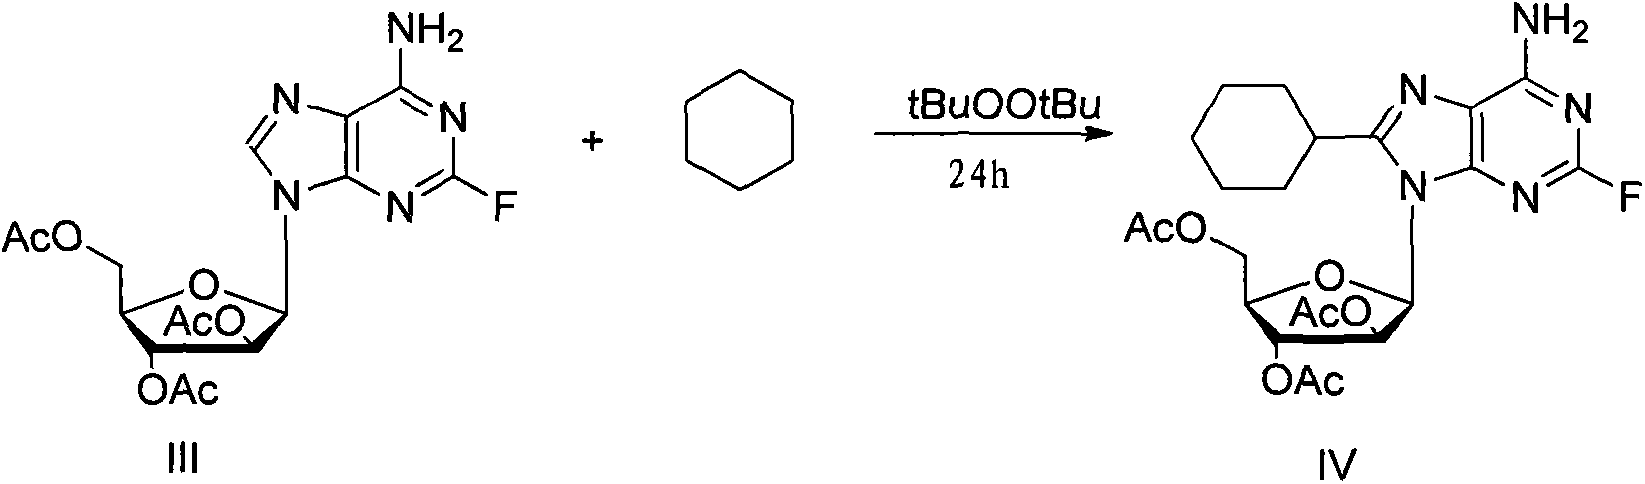 8-cyclohexyl-2-fluoro-vidarabine as well as preparation method and application thereof